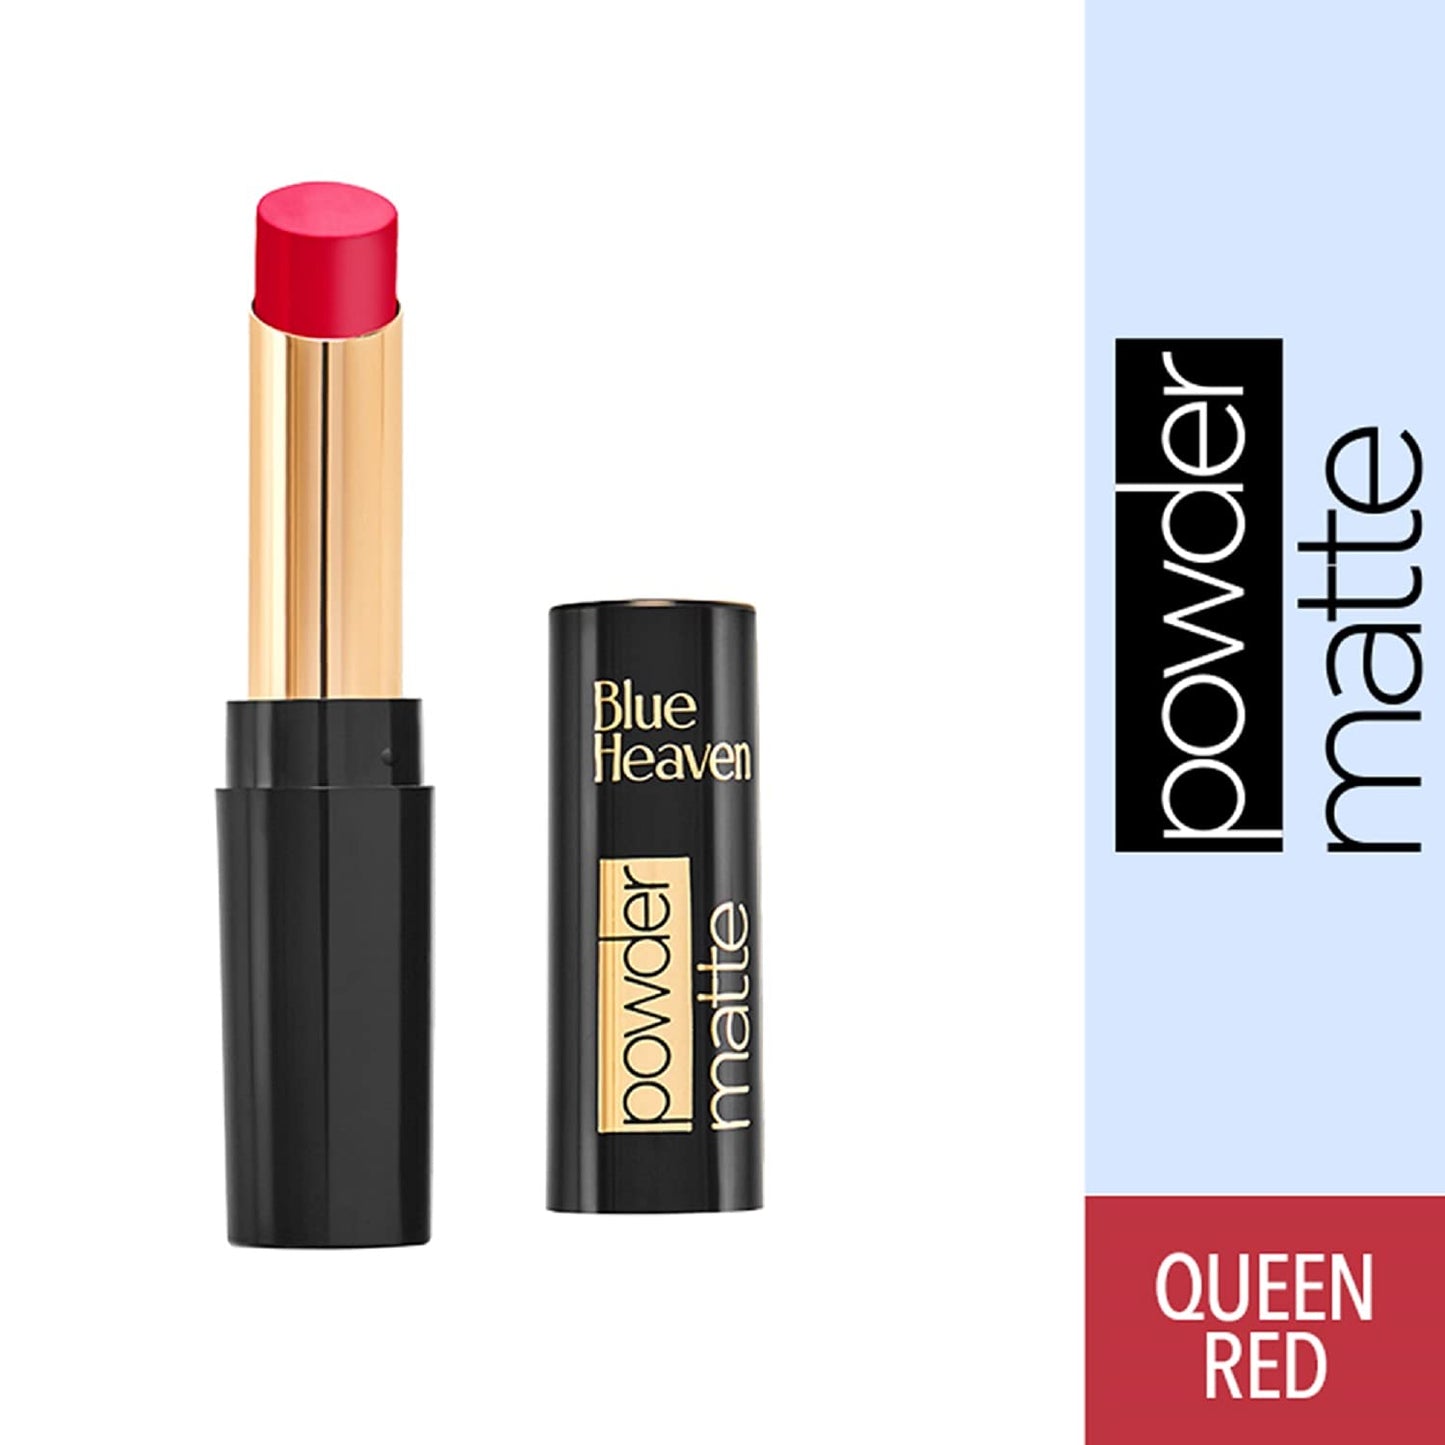 Blue Heaven Powder Matte Lipstick, Waterproof, Longlasting, RM04, Queen Red, 3.5gm